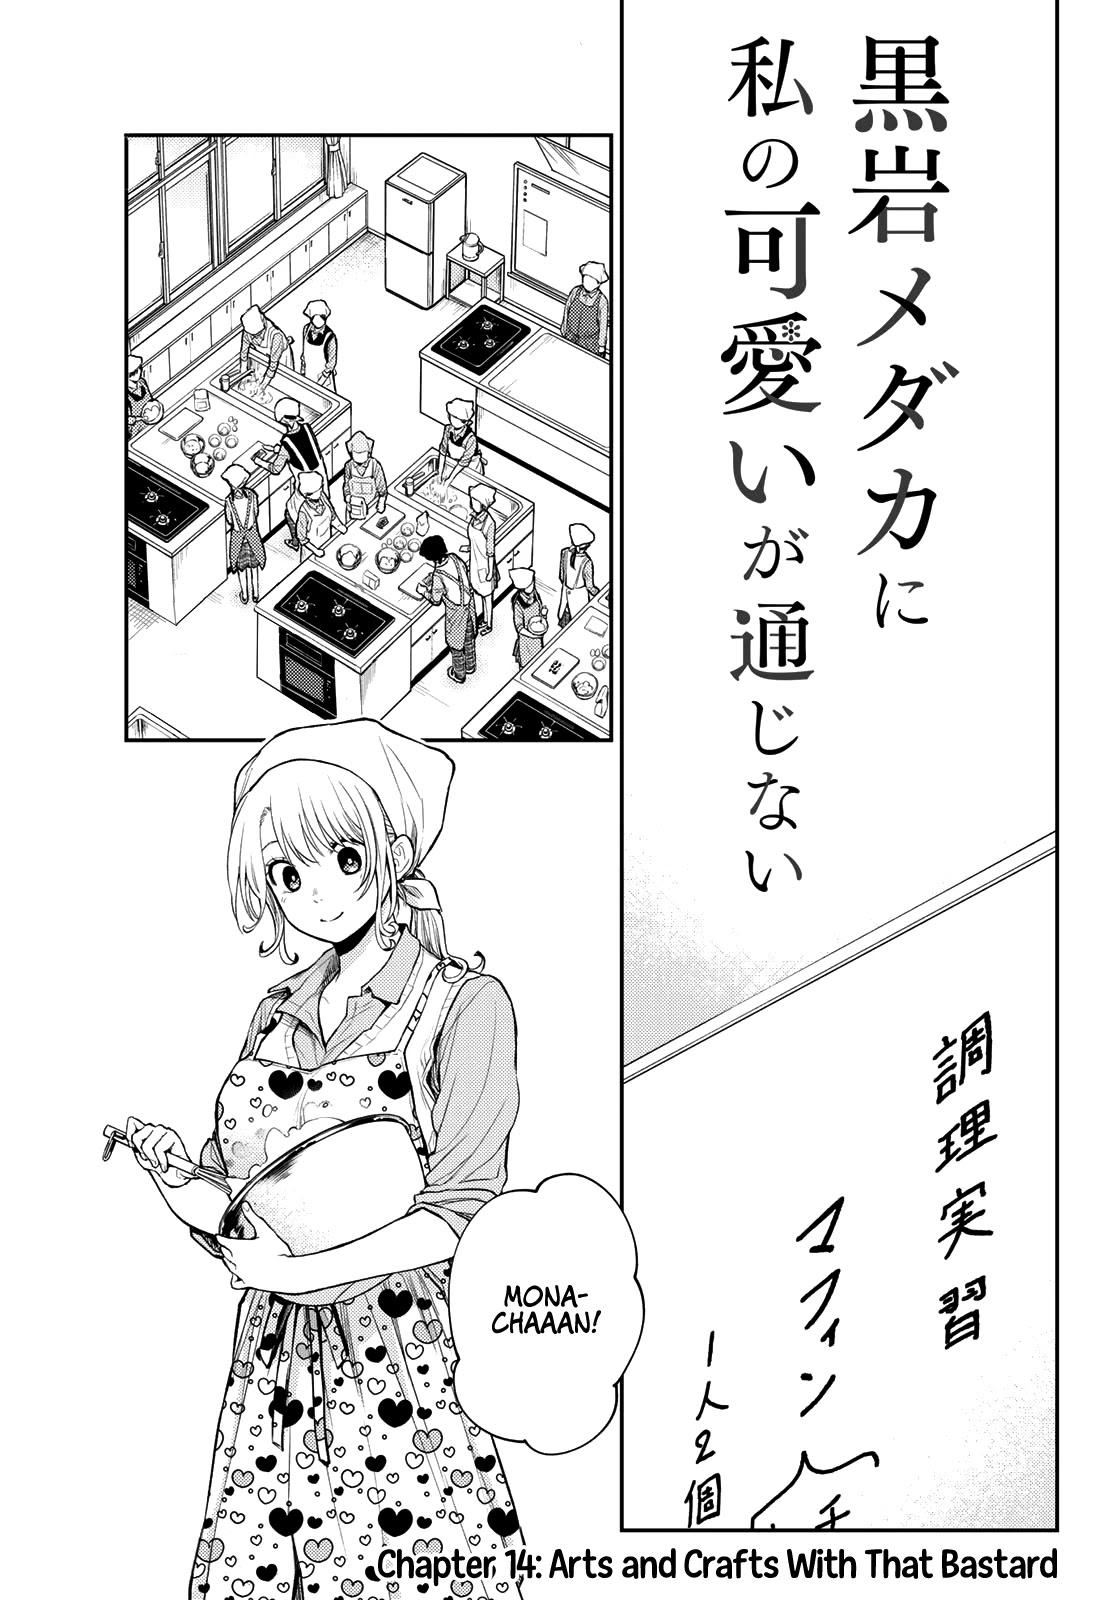 My Charms Are Wasted On Kuroiwa Medaka - Page 2